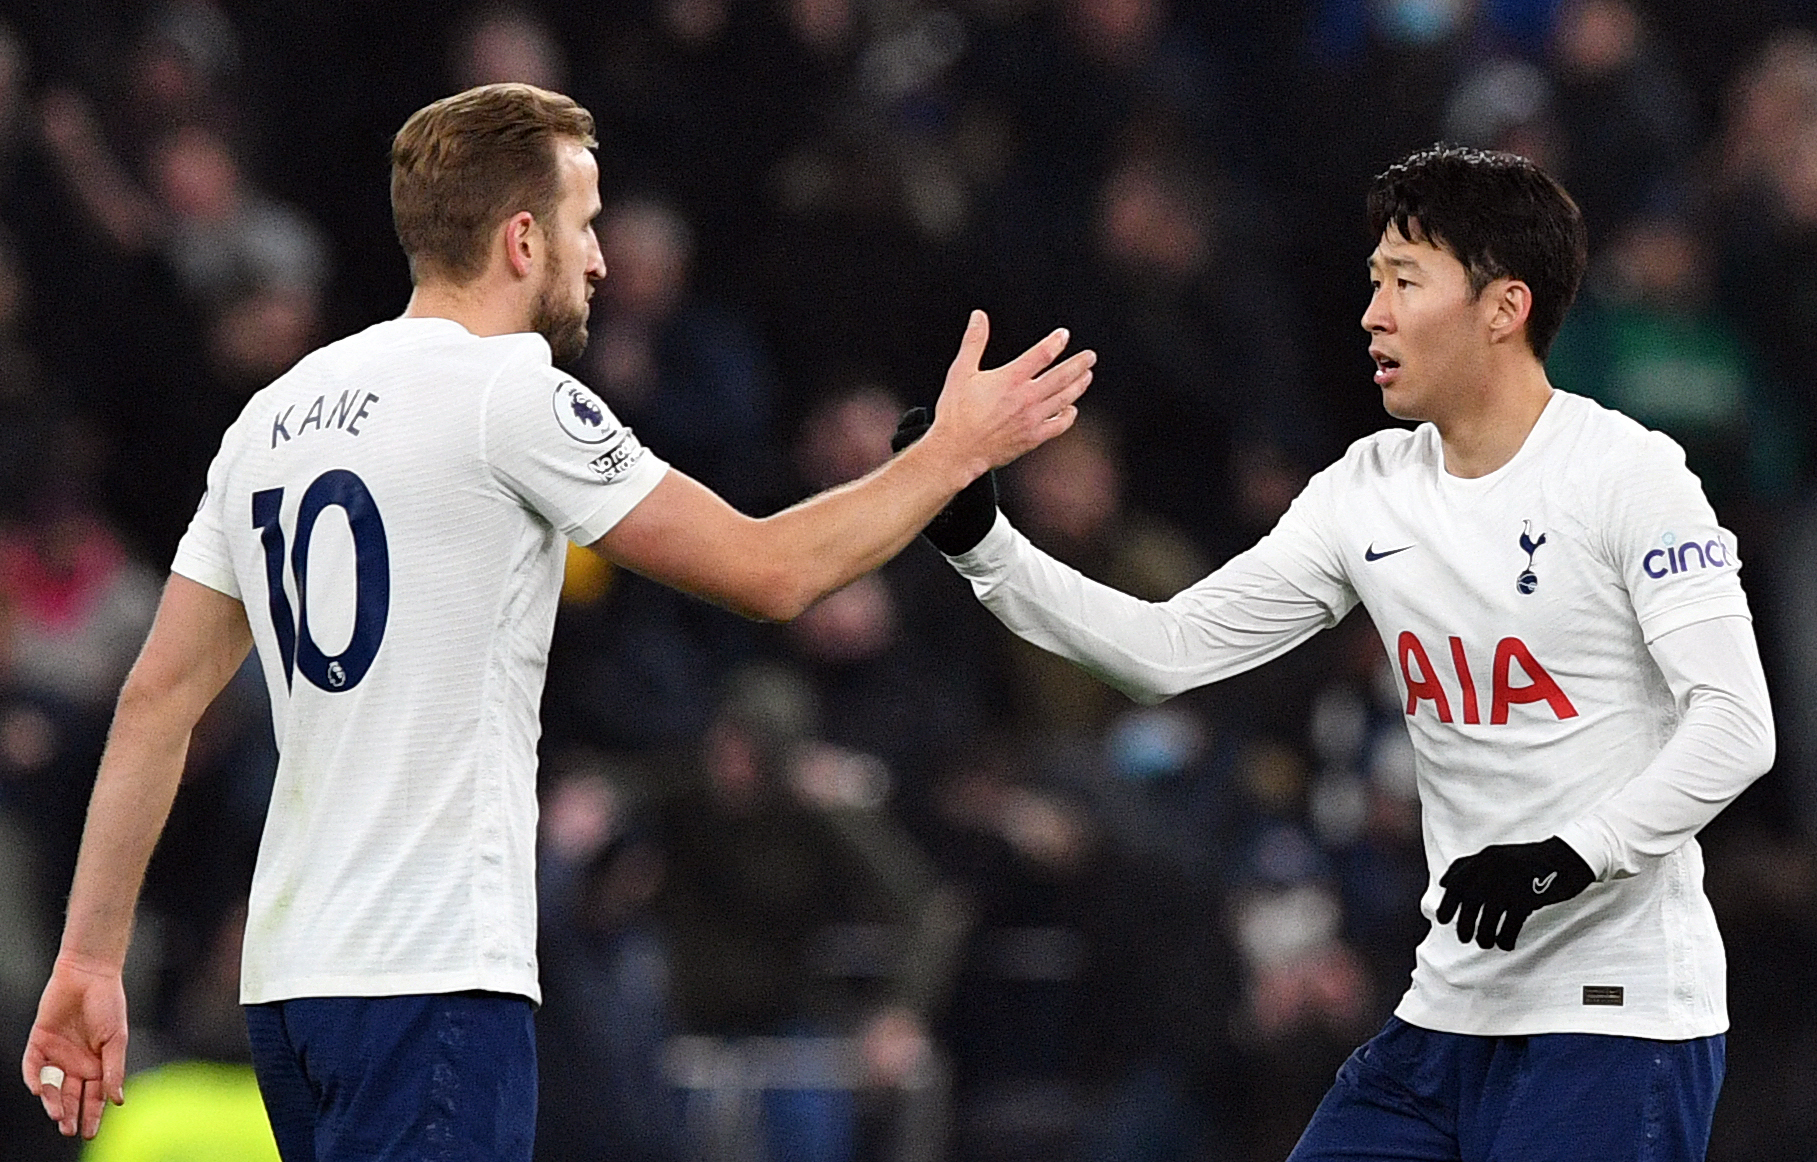 Tottenham (Son & Kane)